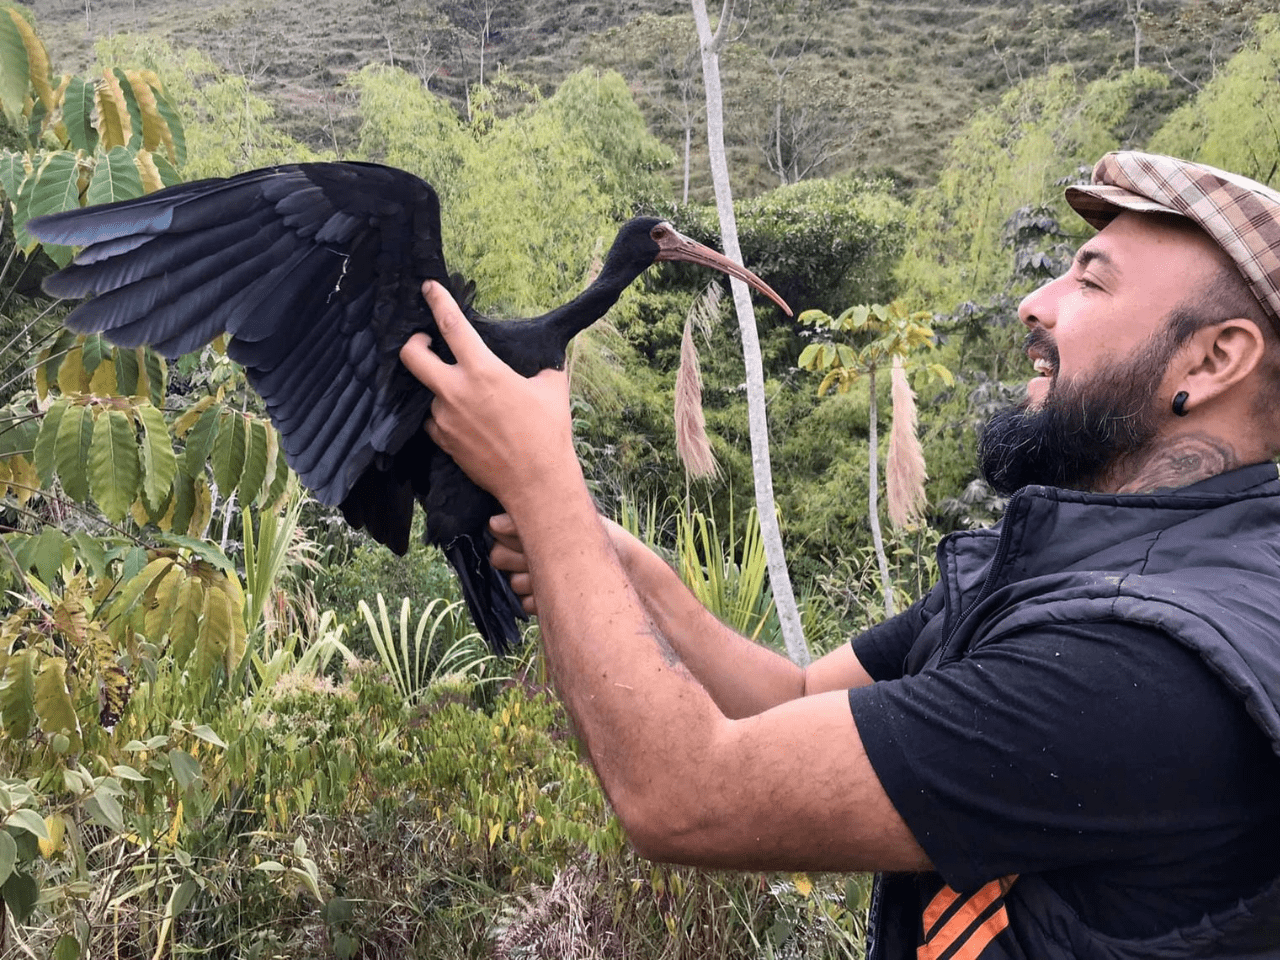 Davis Beltrán, founder of the wildlife refuge Casita del Bosque, with a black vulture